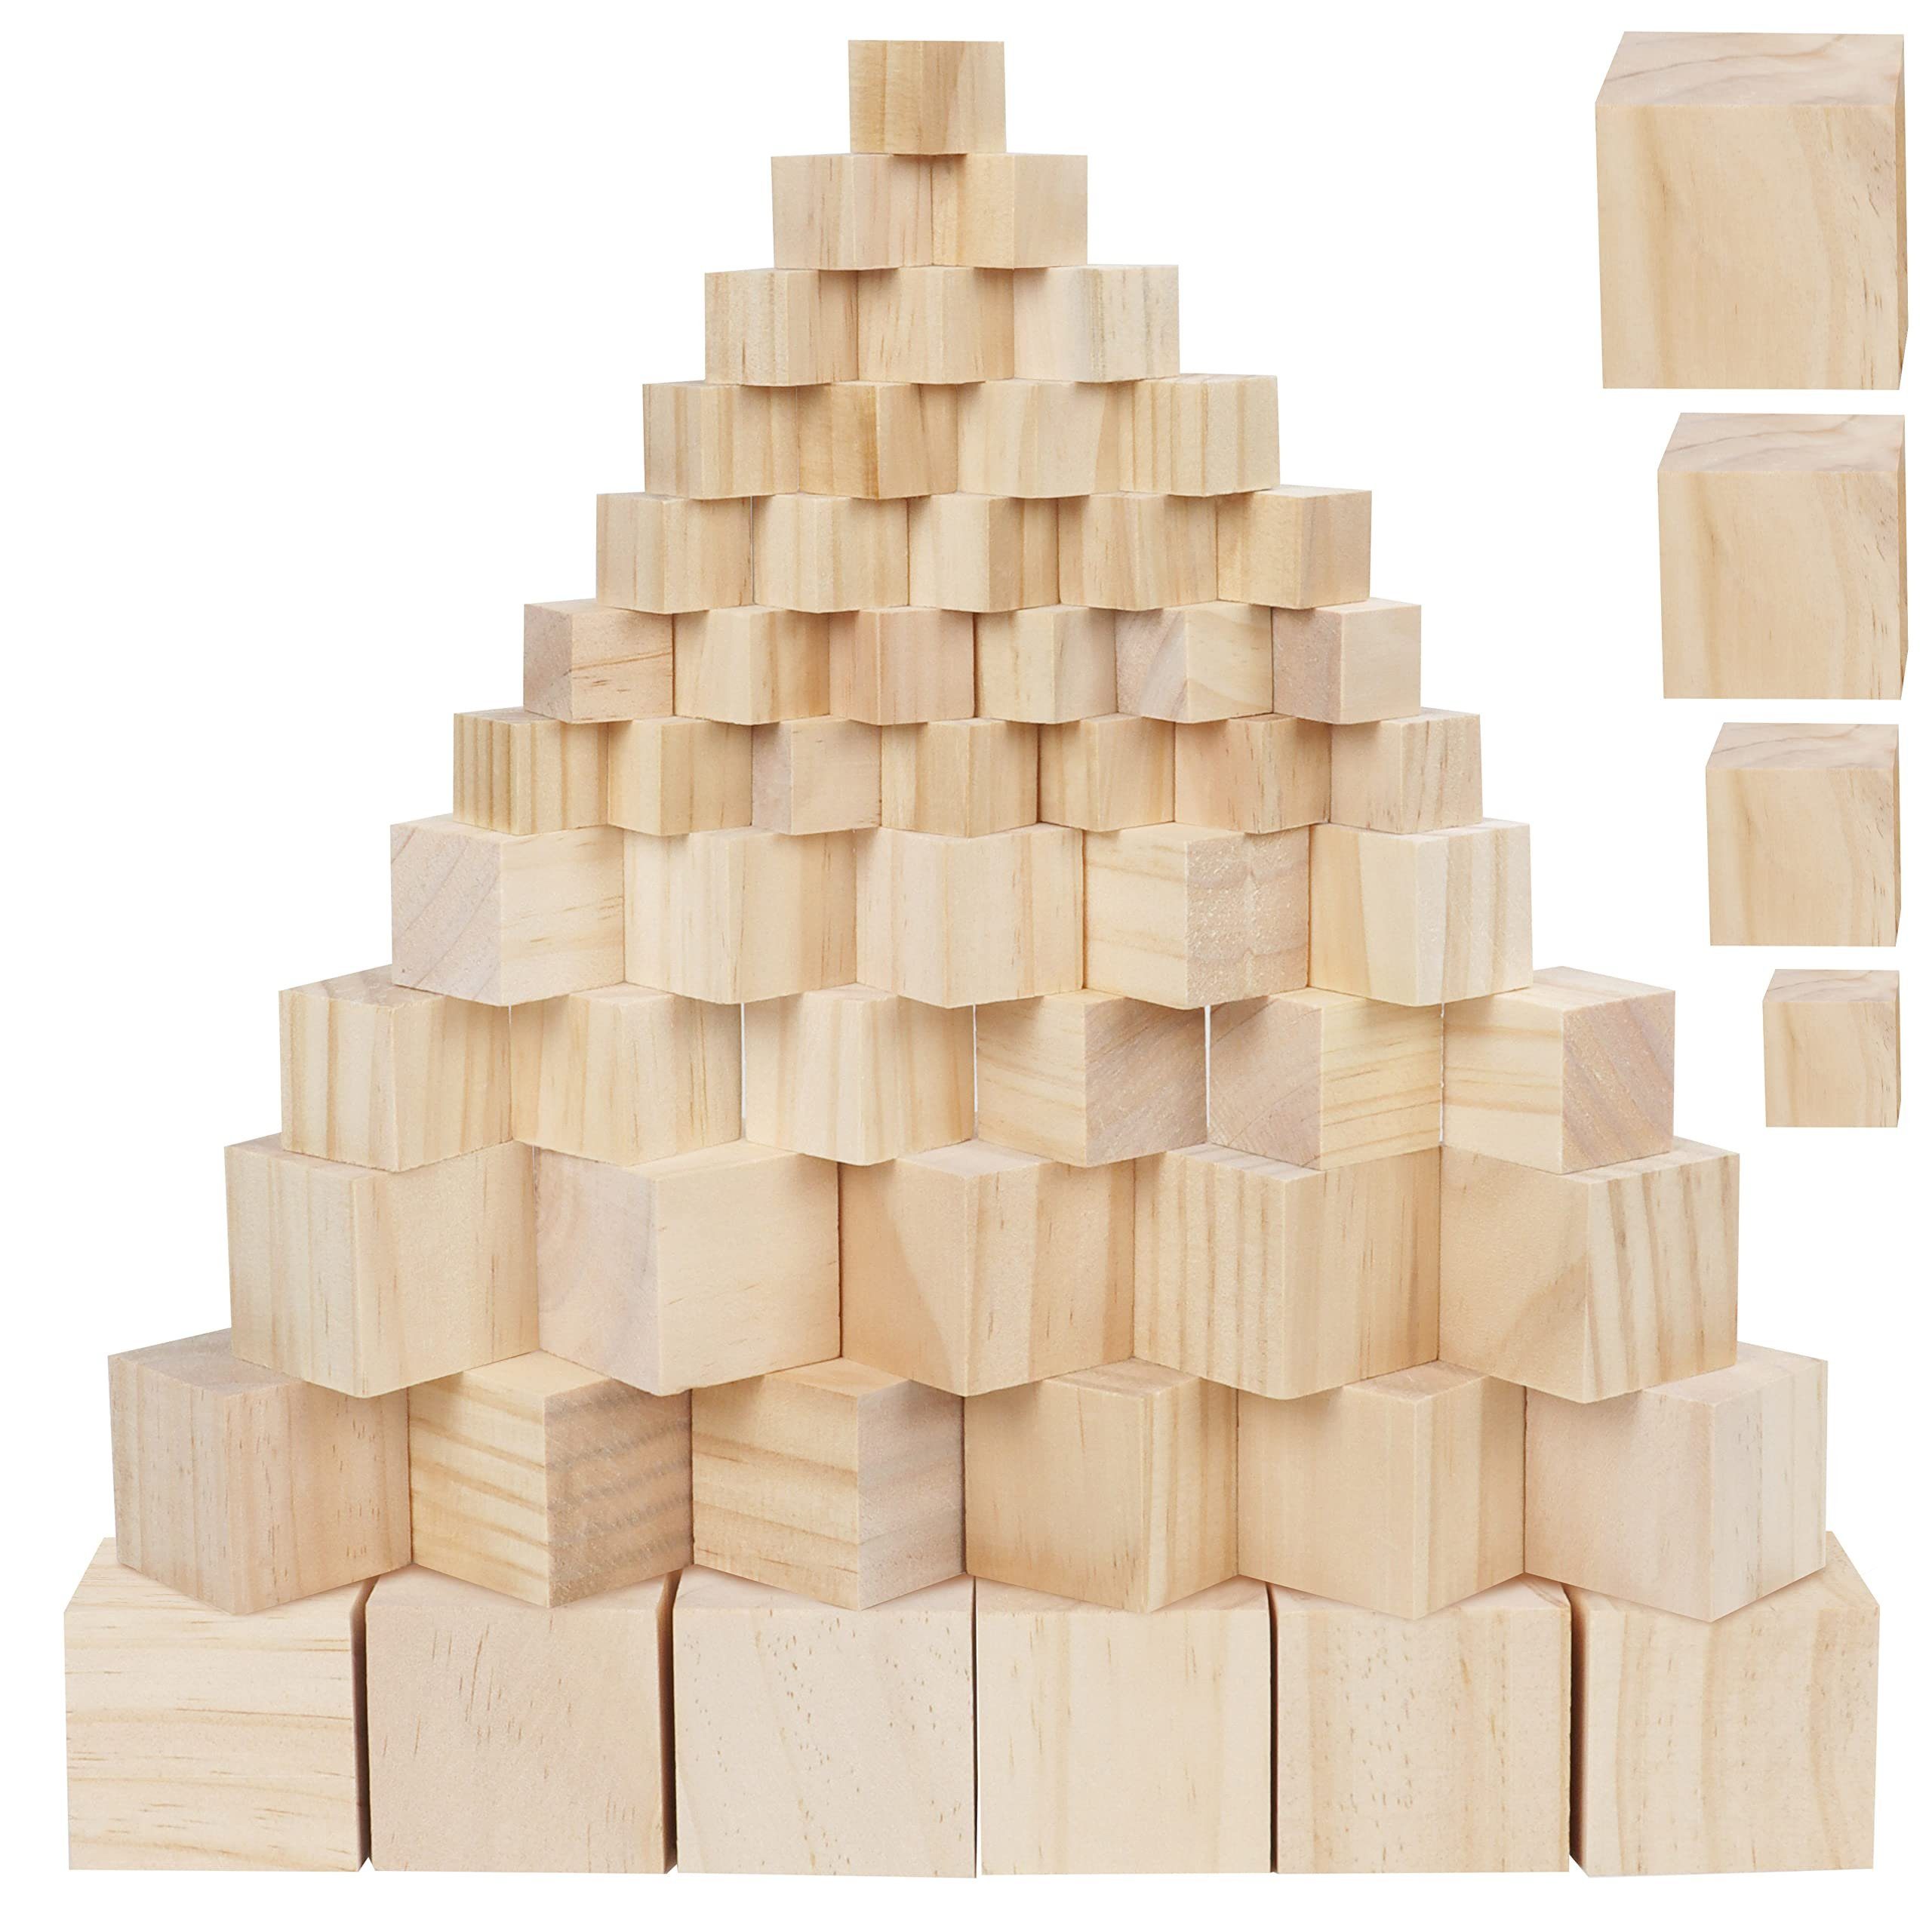 und 4 4 - Greifling Belle Vous Kiefernholzblöcke für Basteln Set Bemalen - Holzwürfel - Basteln, Größen zum Holzwürfel Dimensionen Pack Kiefernholzblöcke -